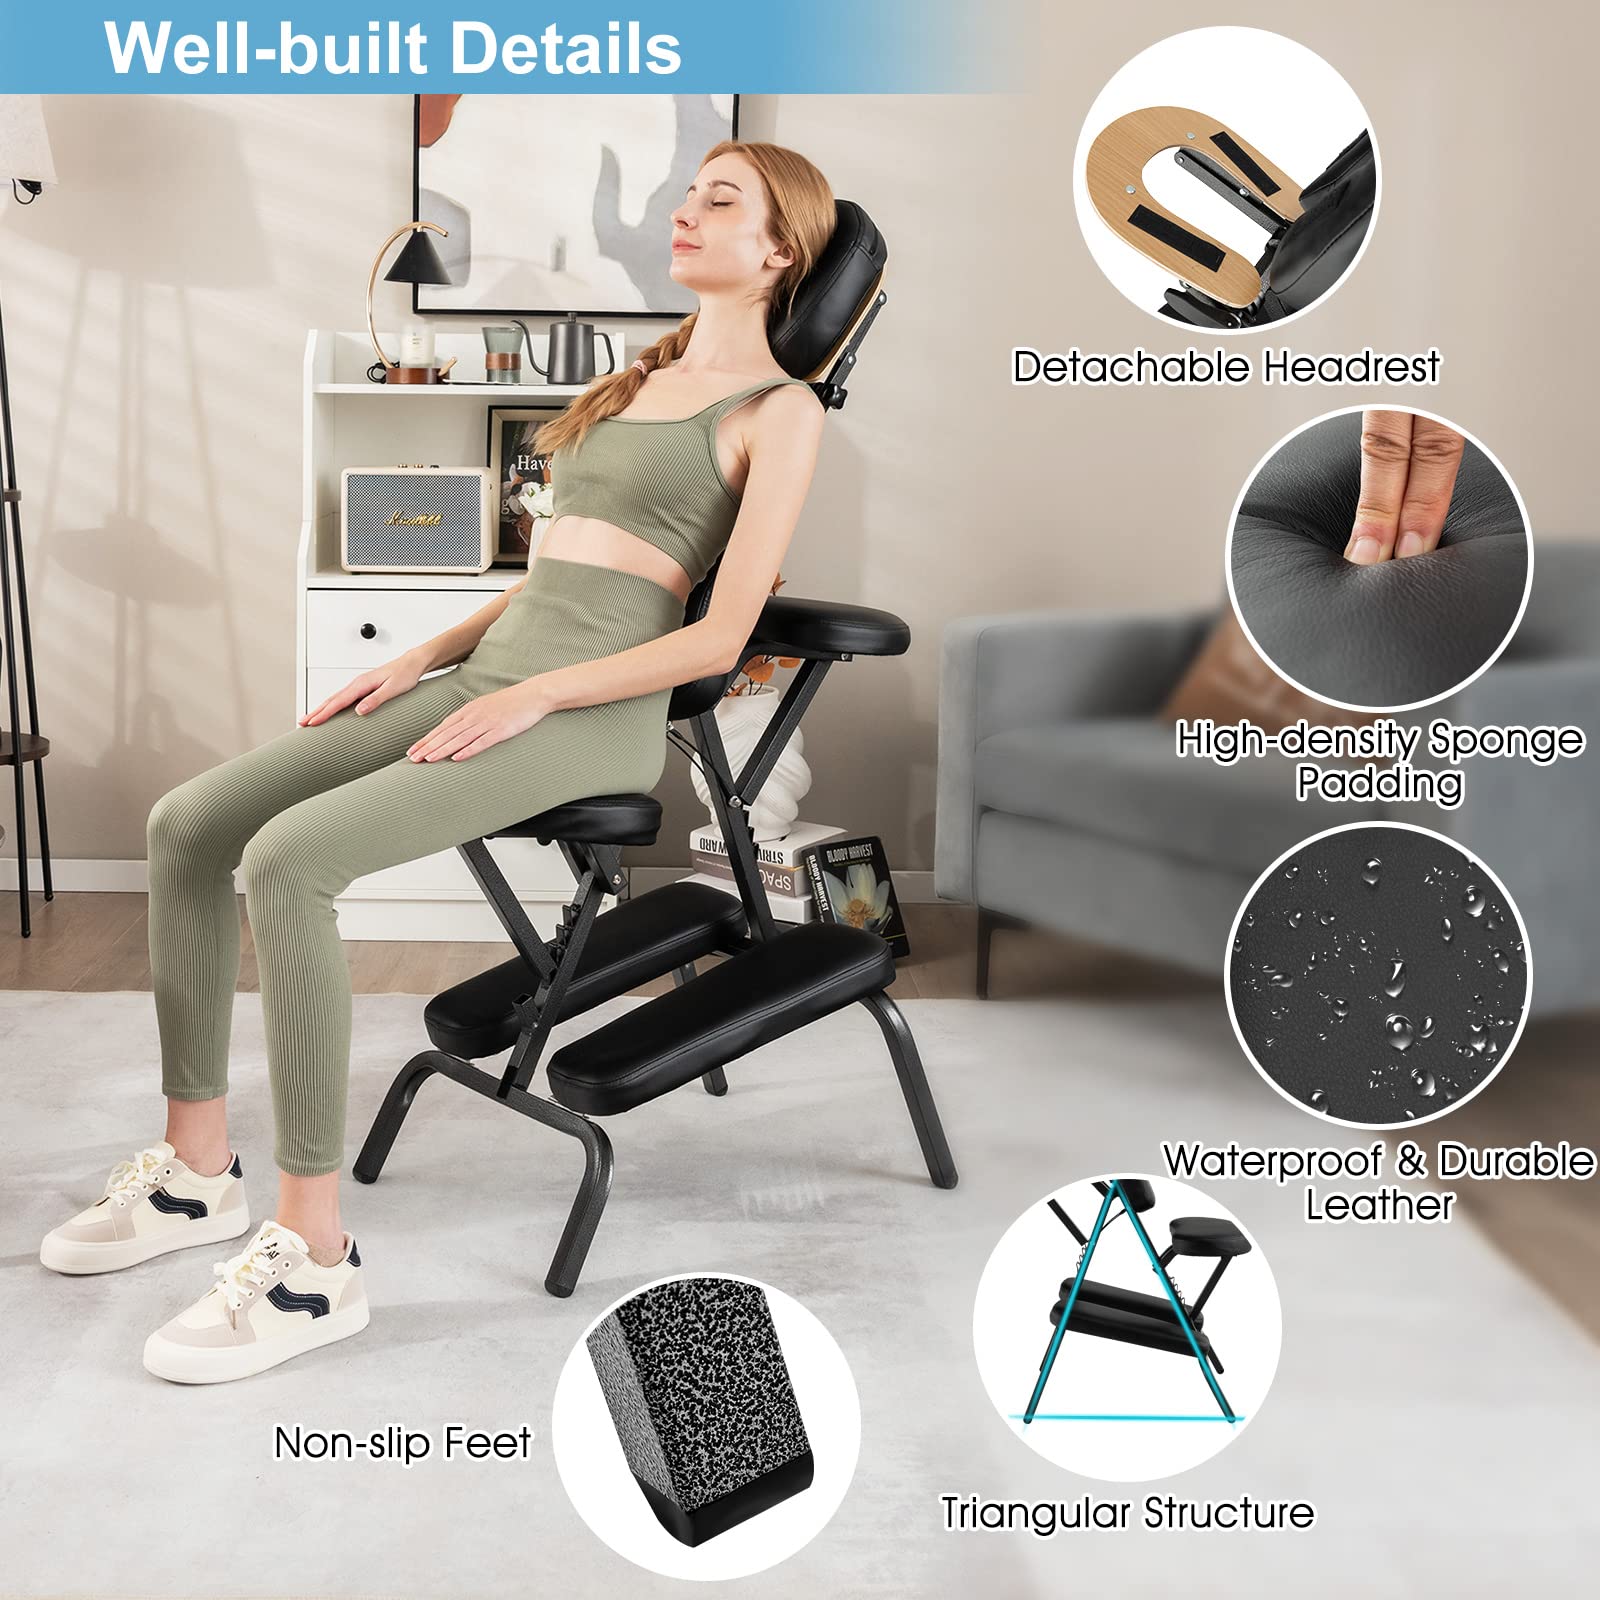 Portable Light Weight Massage Chair Travel Massage Tattoo Spa Chair